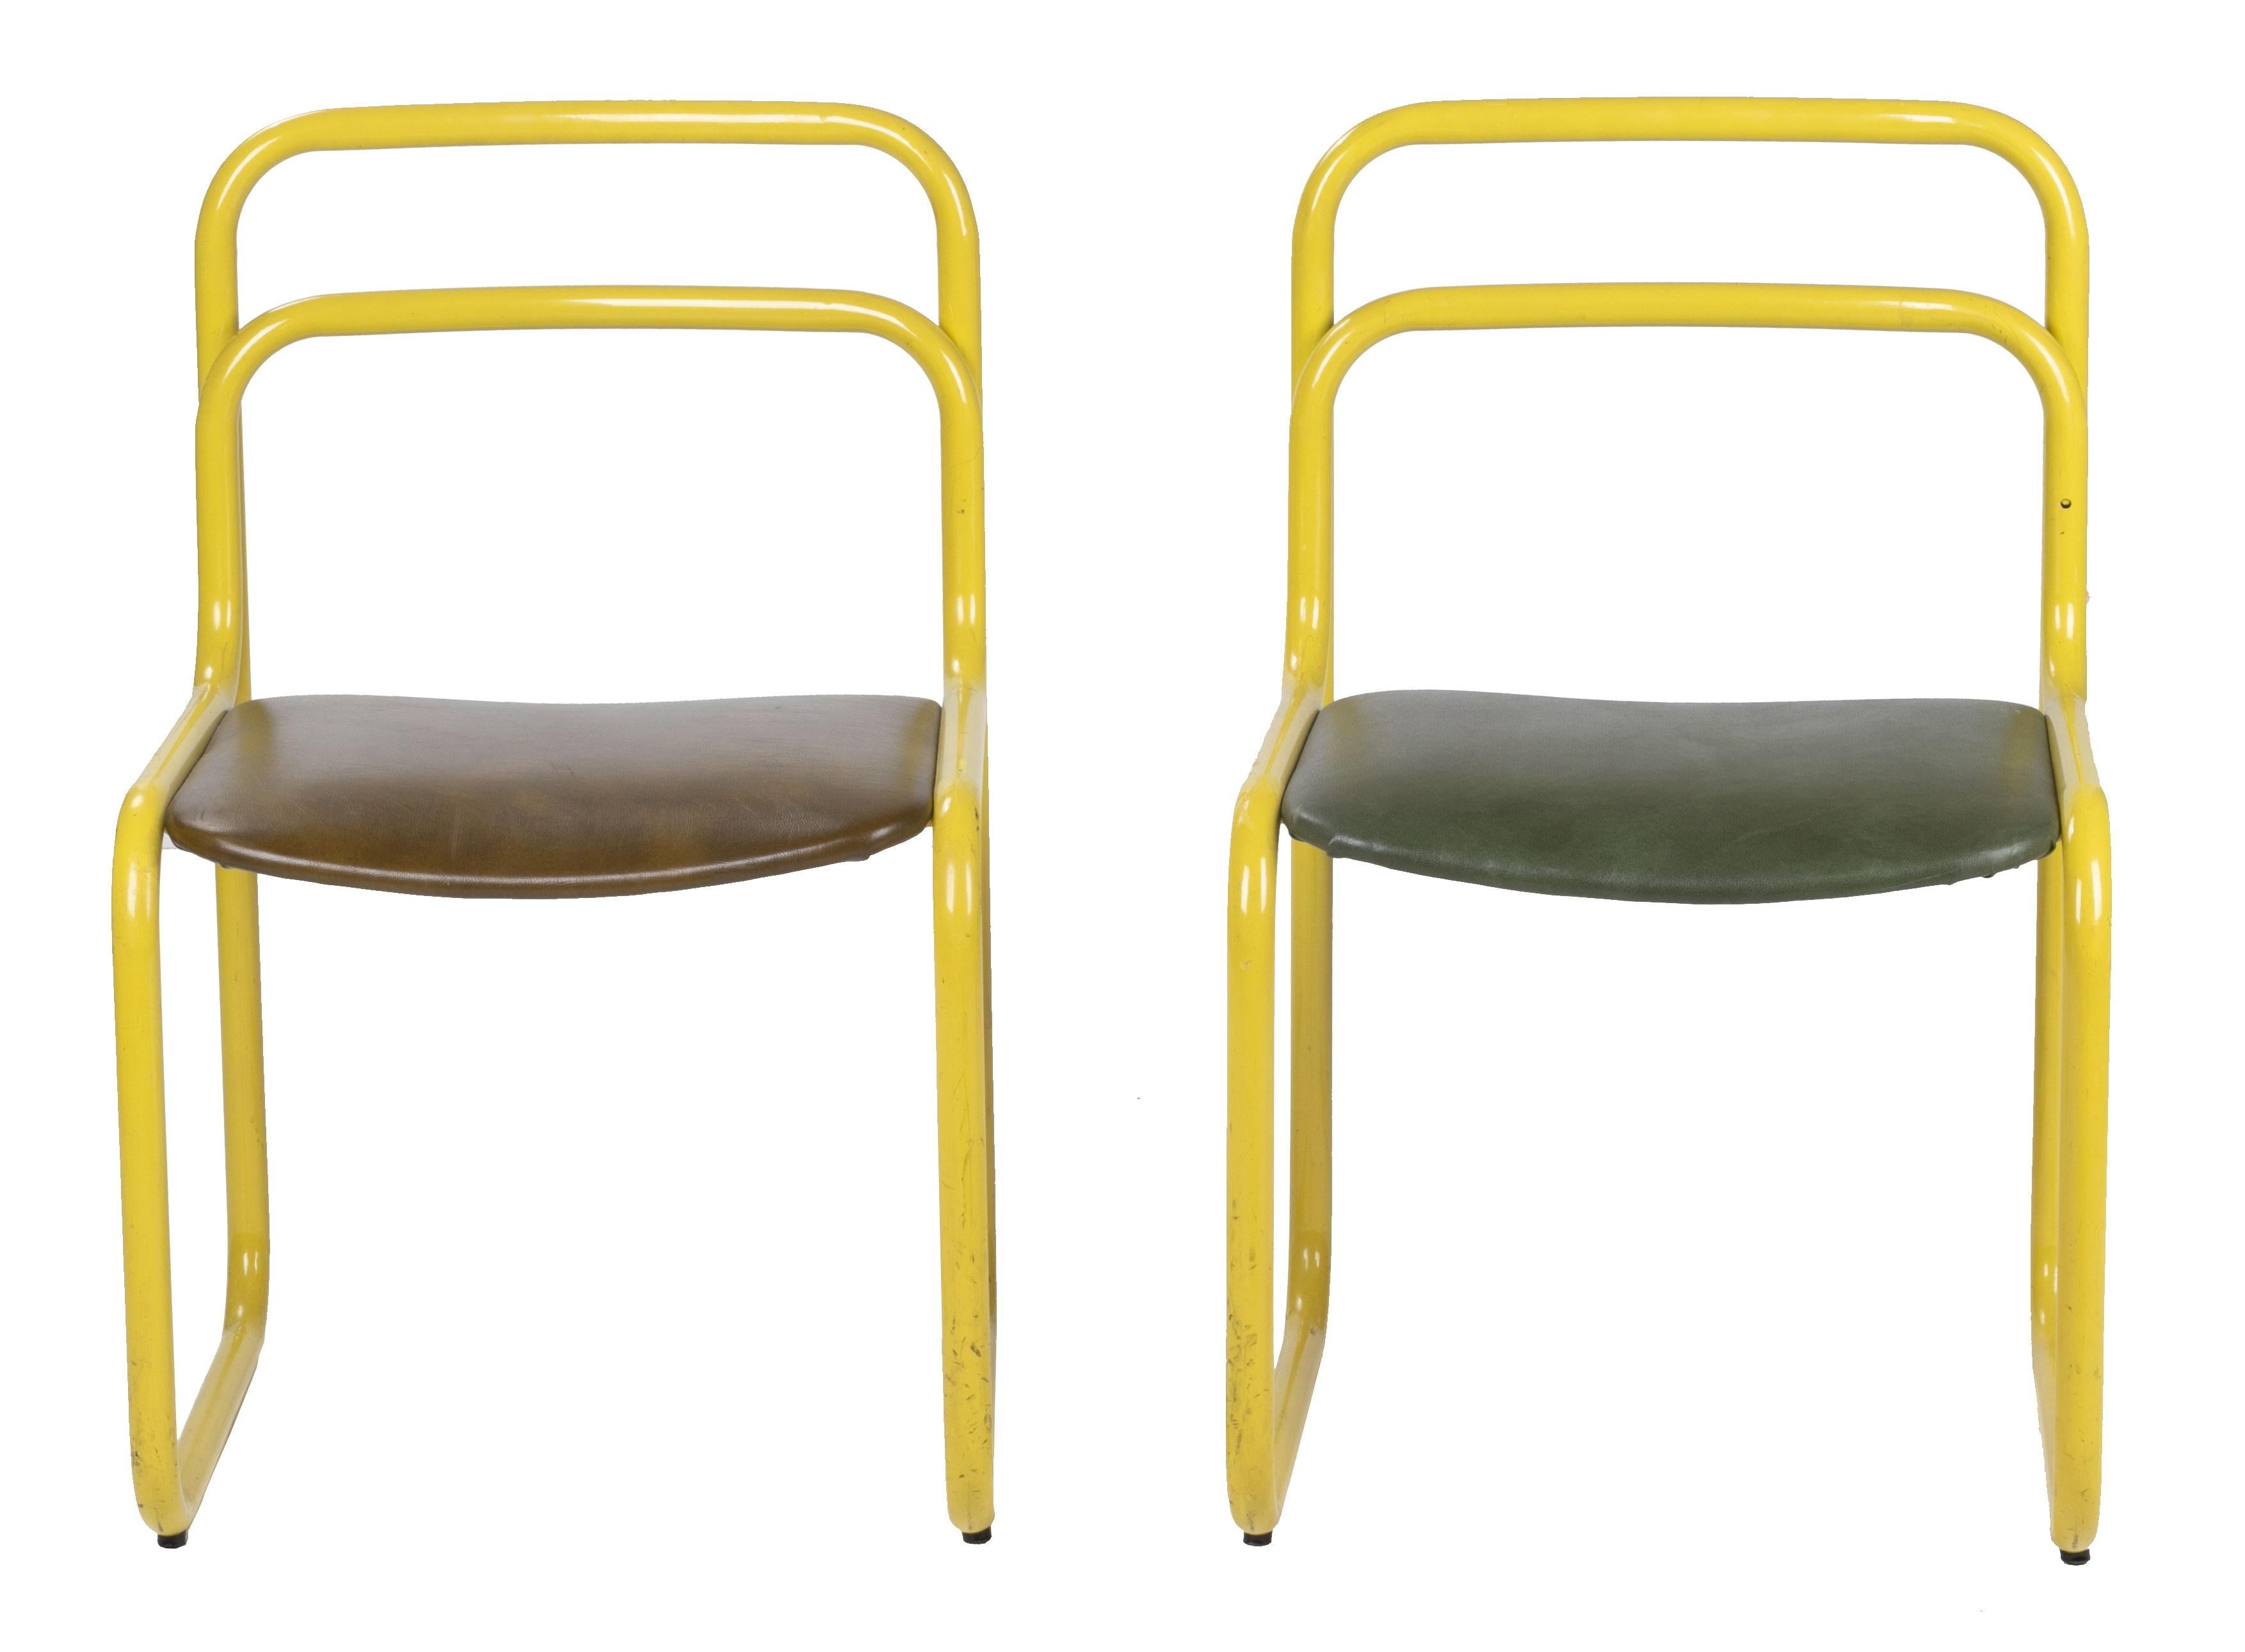 1970s Italian pair of vintage steel yellow chairs.